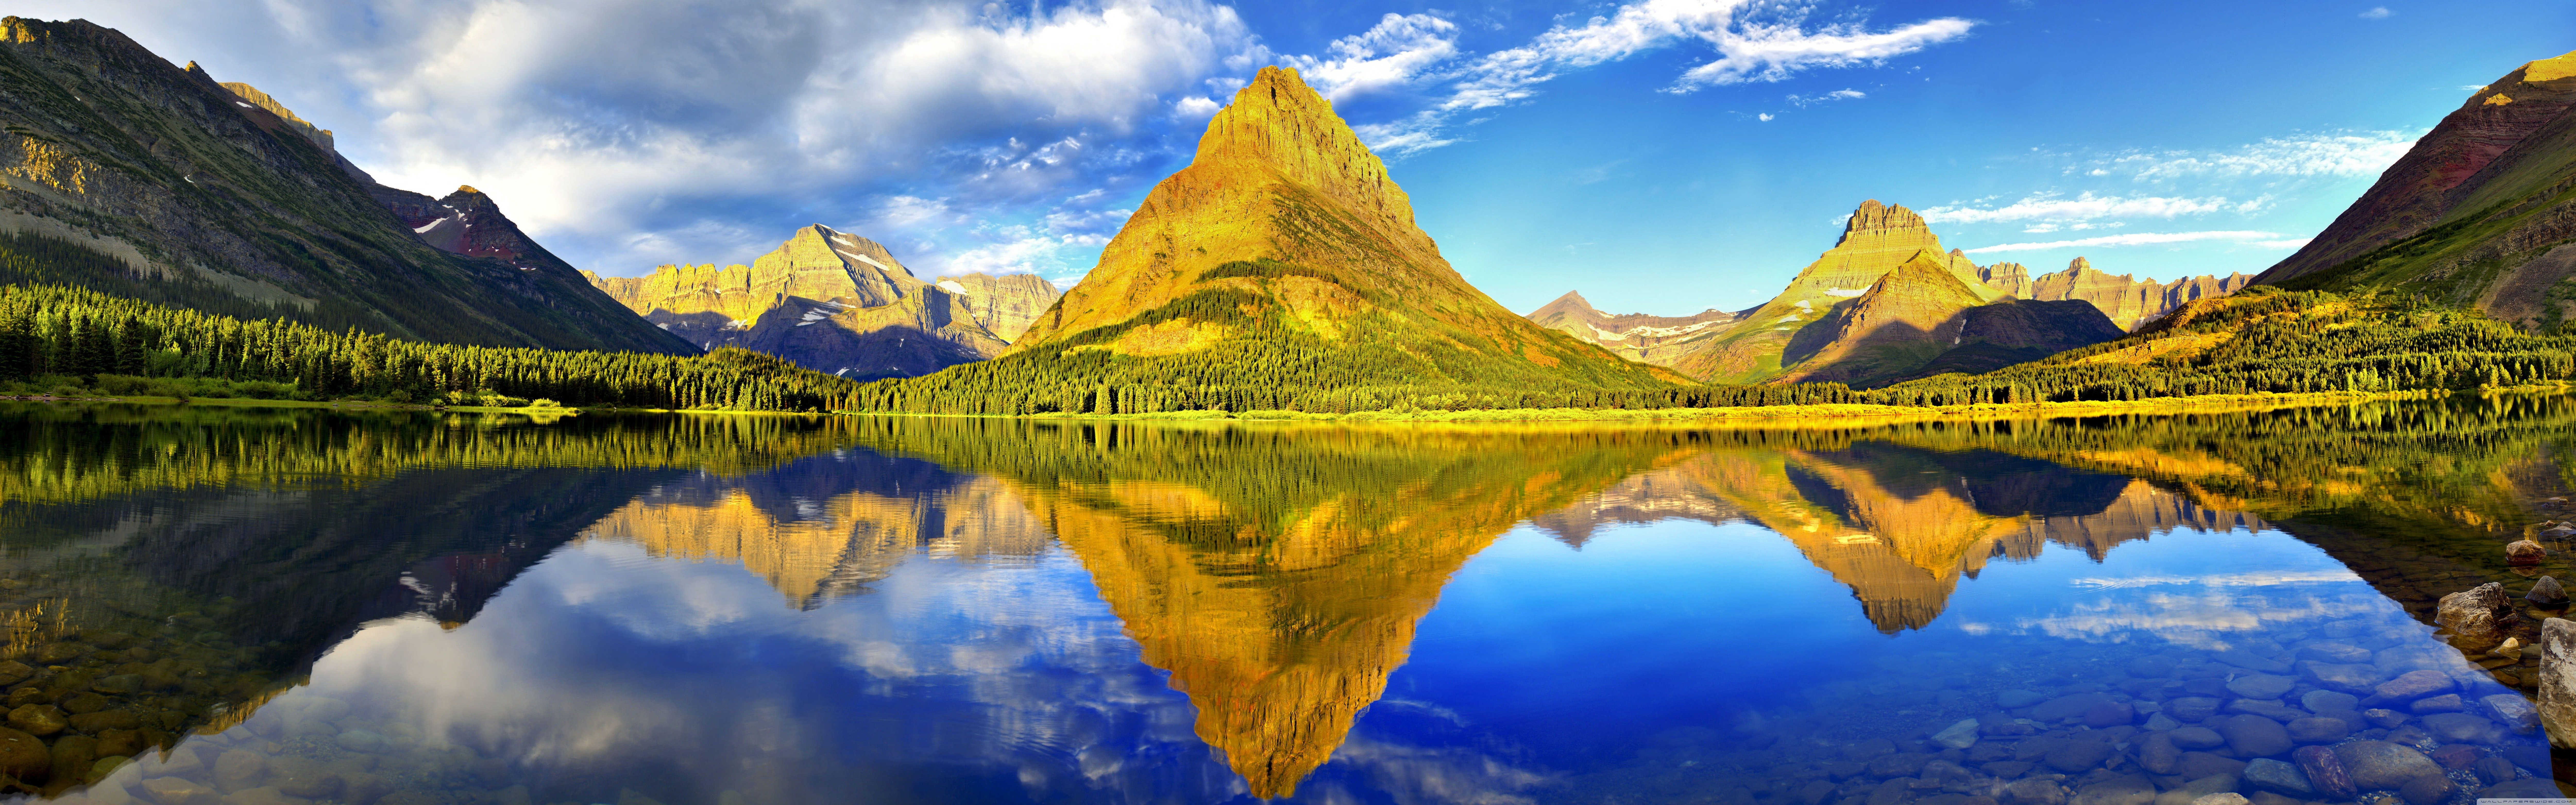 Green mountain, nature, Glacier National Park, reflection, mountains